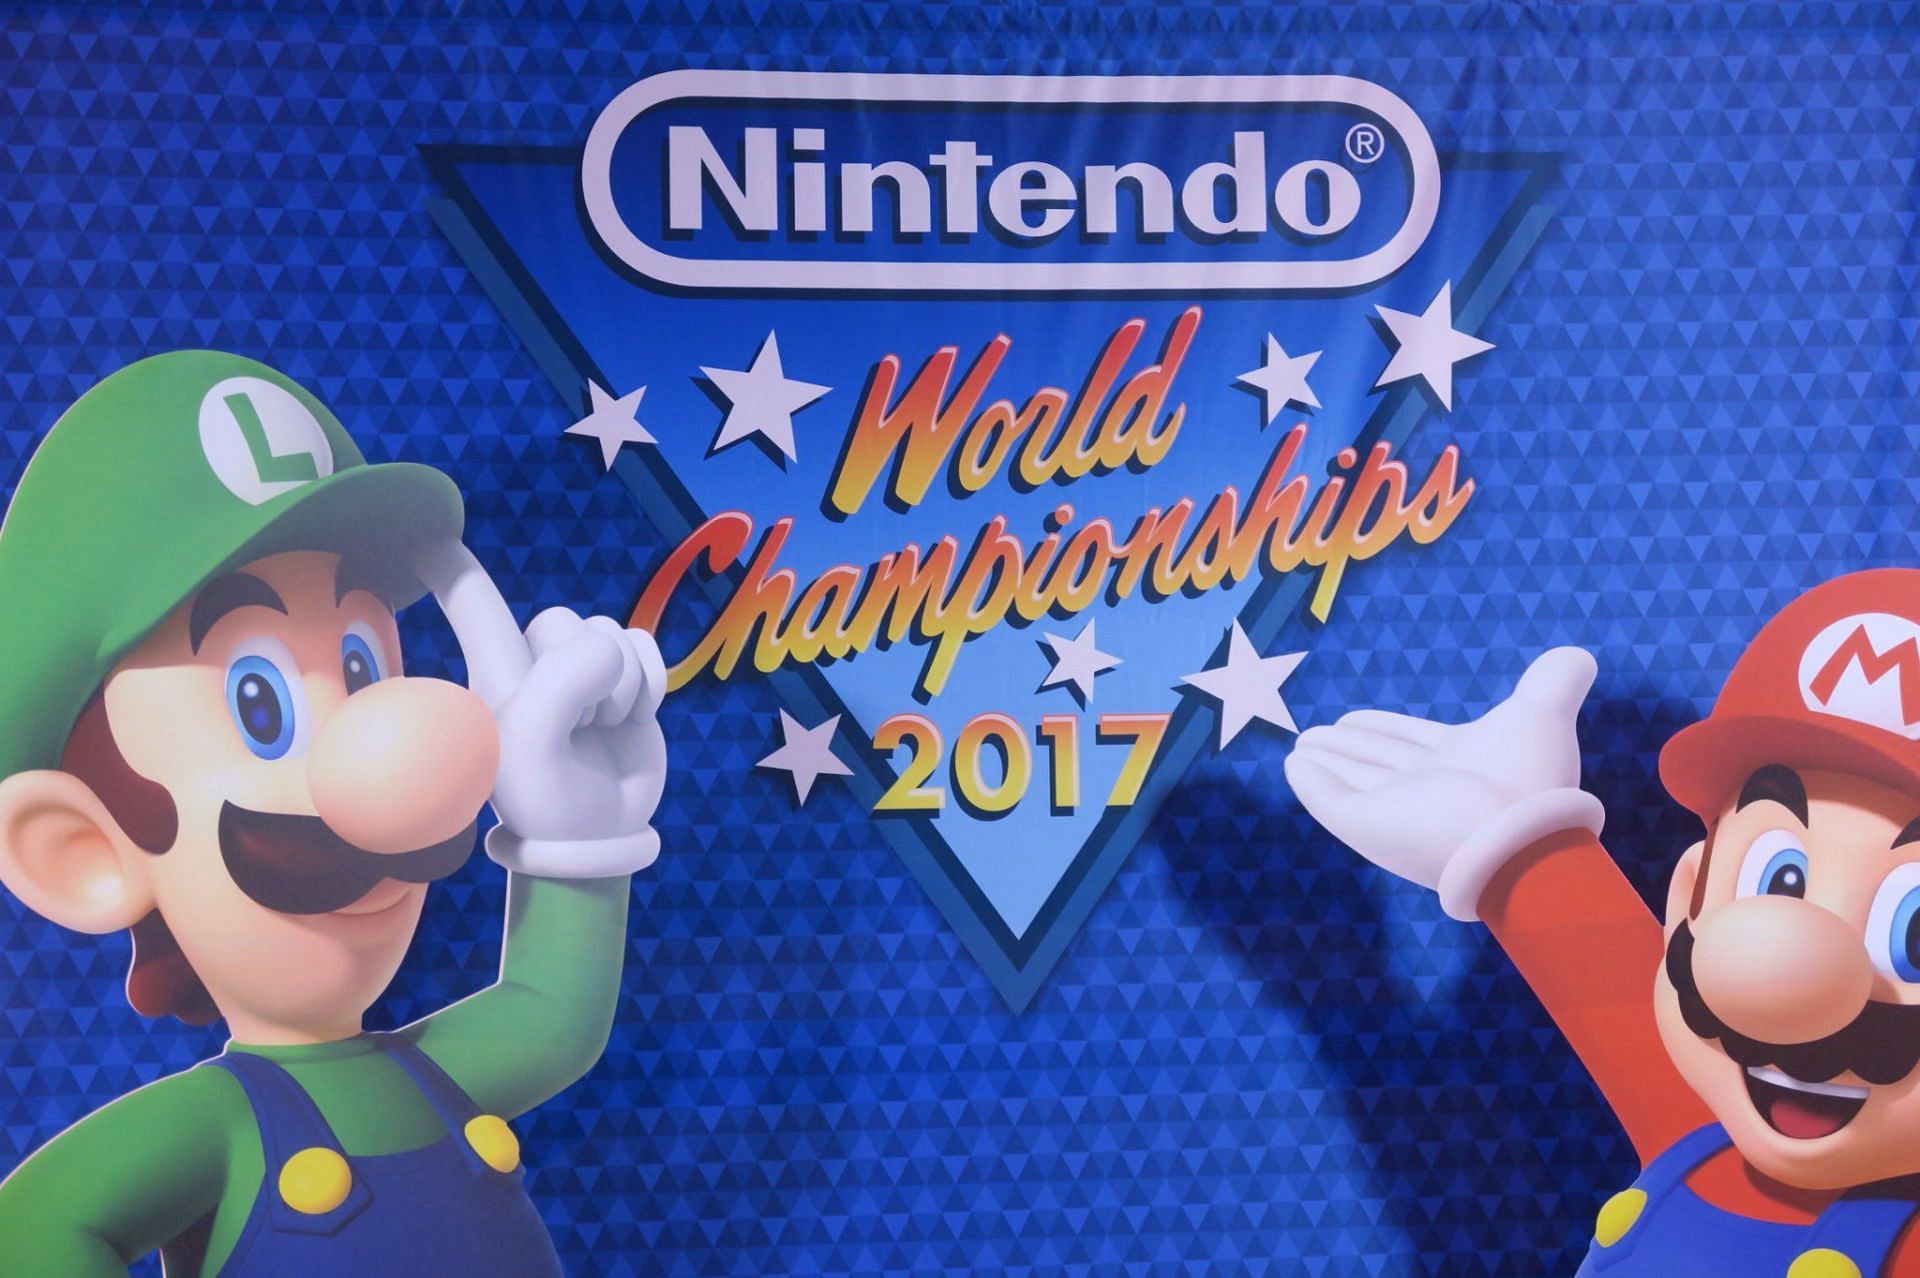 Nintendo World Championships cover